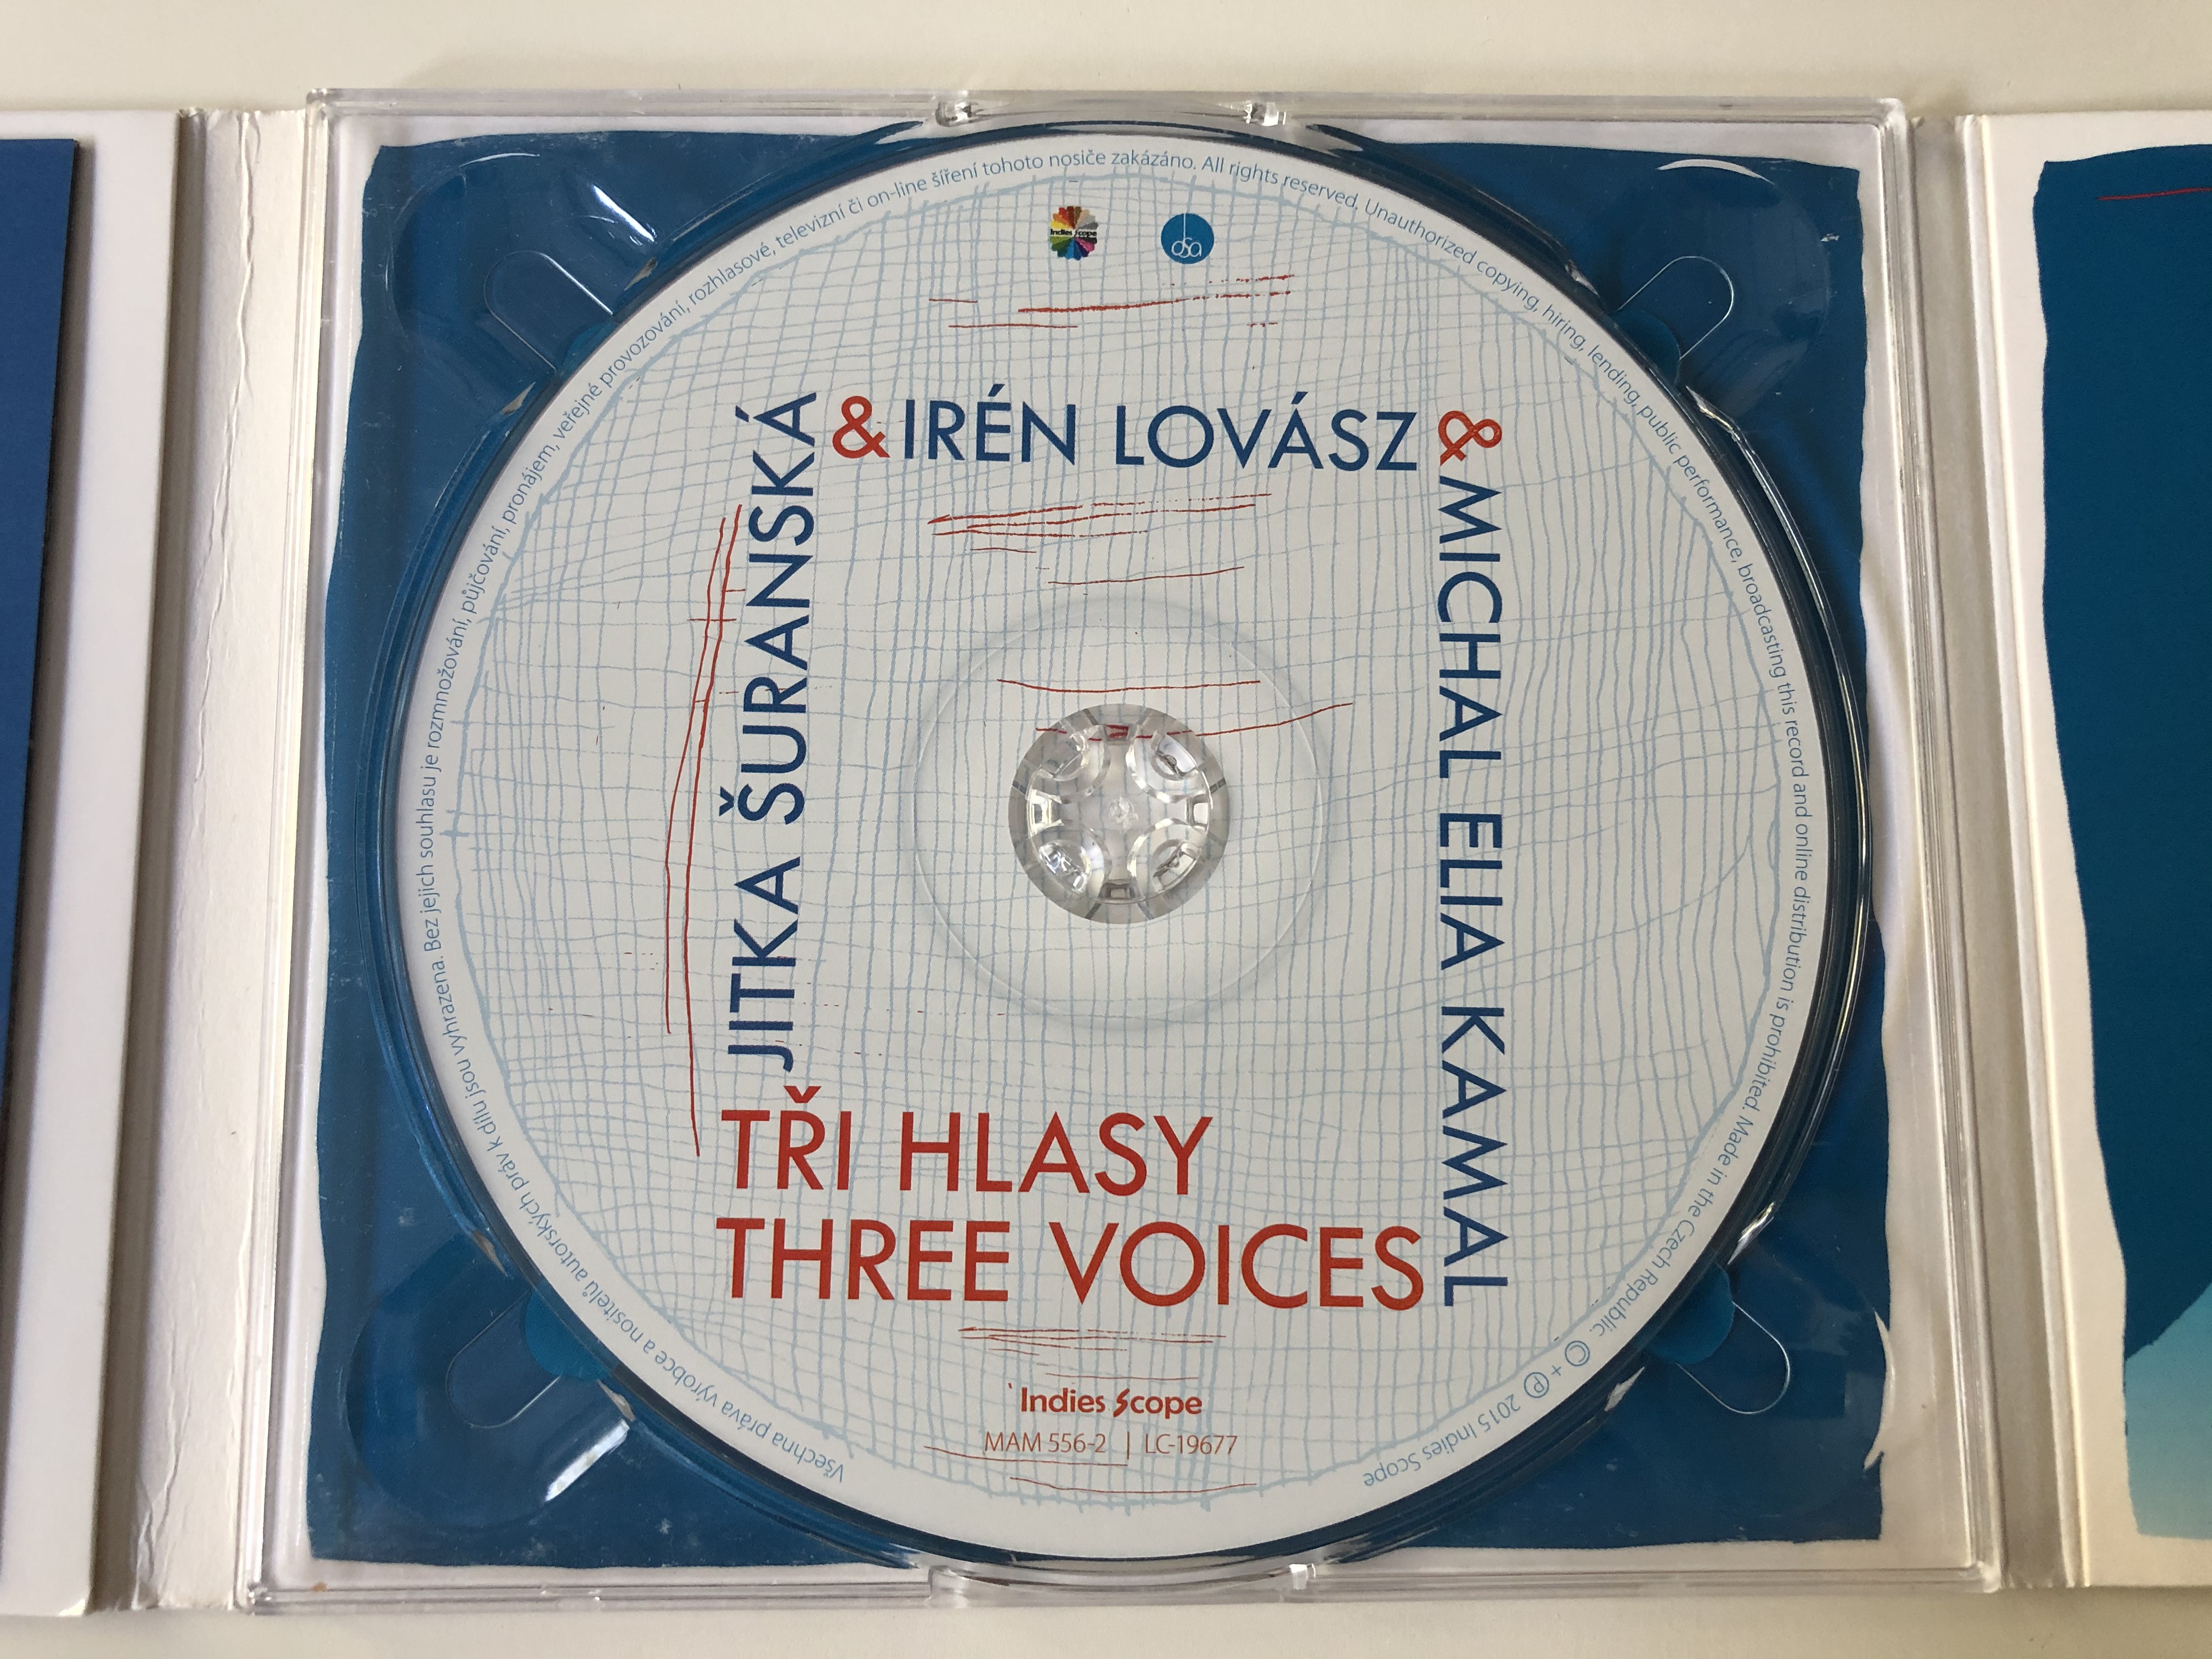 jitka-uransk-ir-n-lov-sz-michal-elia-kamal-t-i-hlasy-three-voices-indies-scope-audio-cd-2015-mam-556-2-3-.jpg